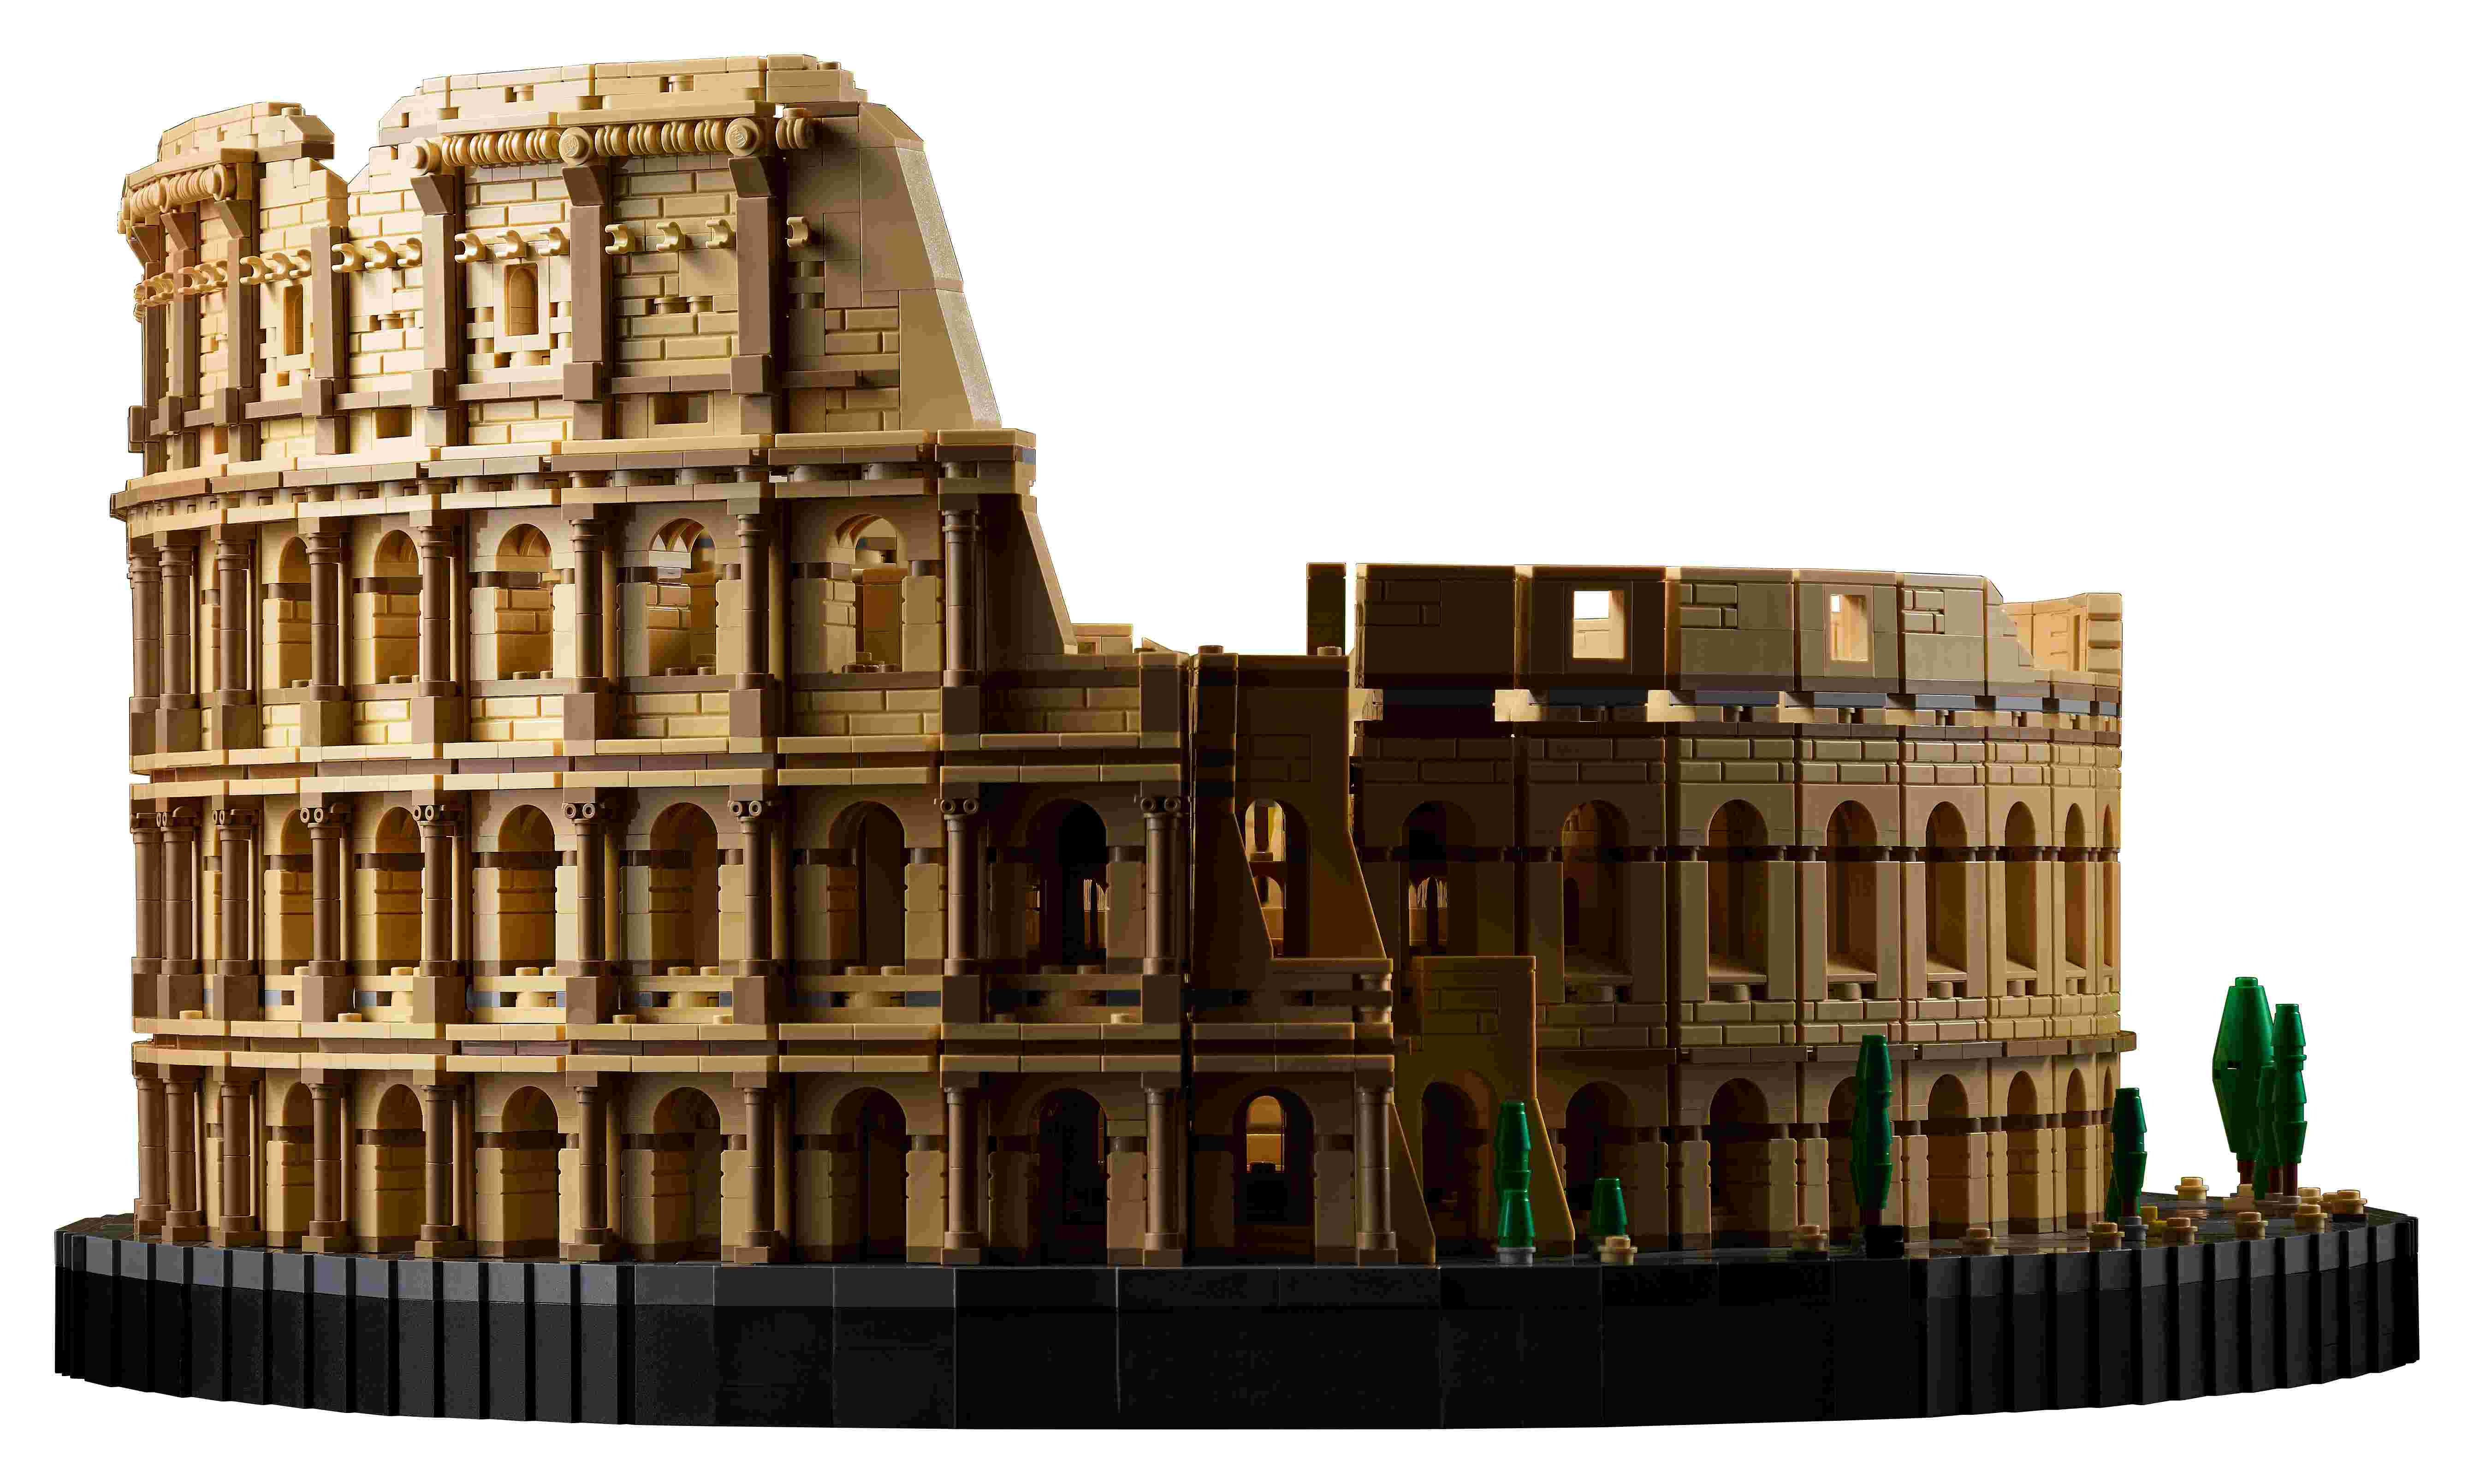 LEGO 10276 Creator Expert Kolosseum - The Collosseum